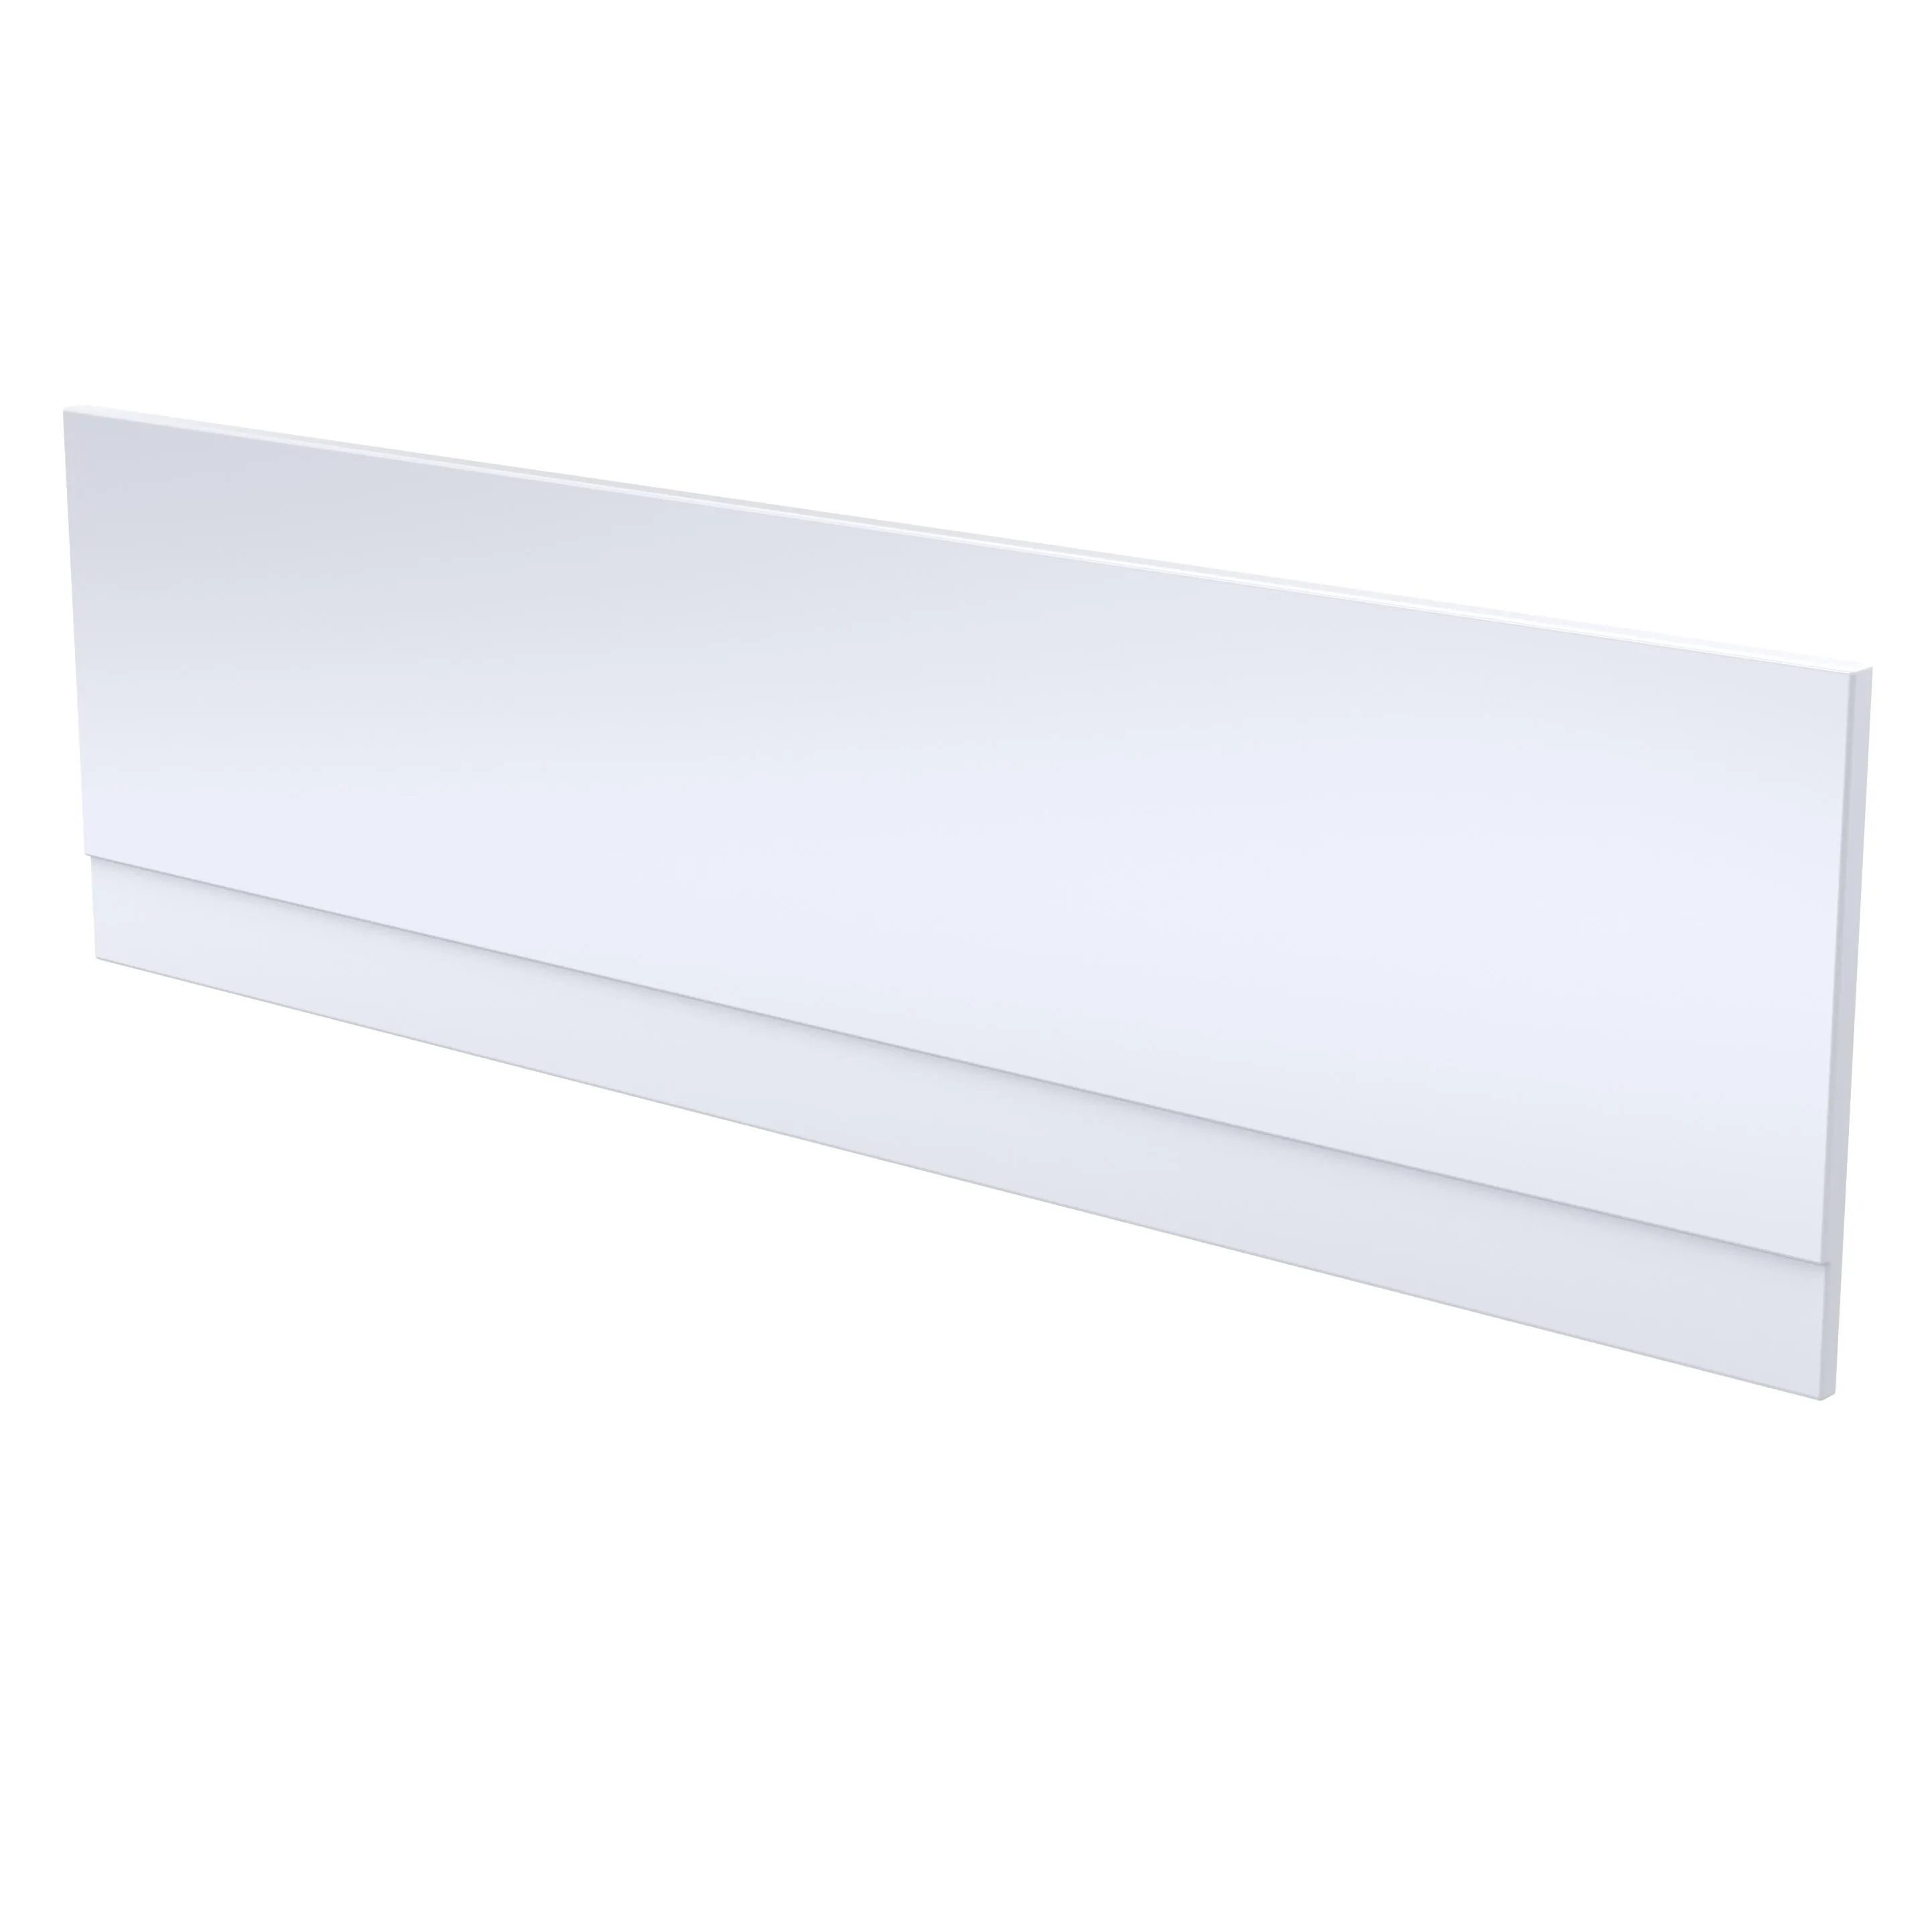 Essentials White Gloss Acrylic Bath Side Panel - 1800mm